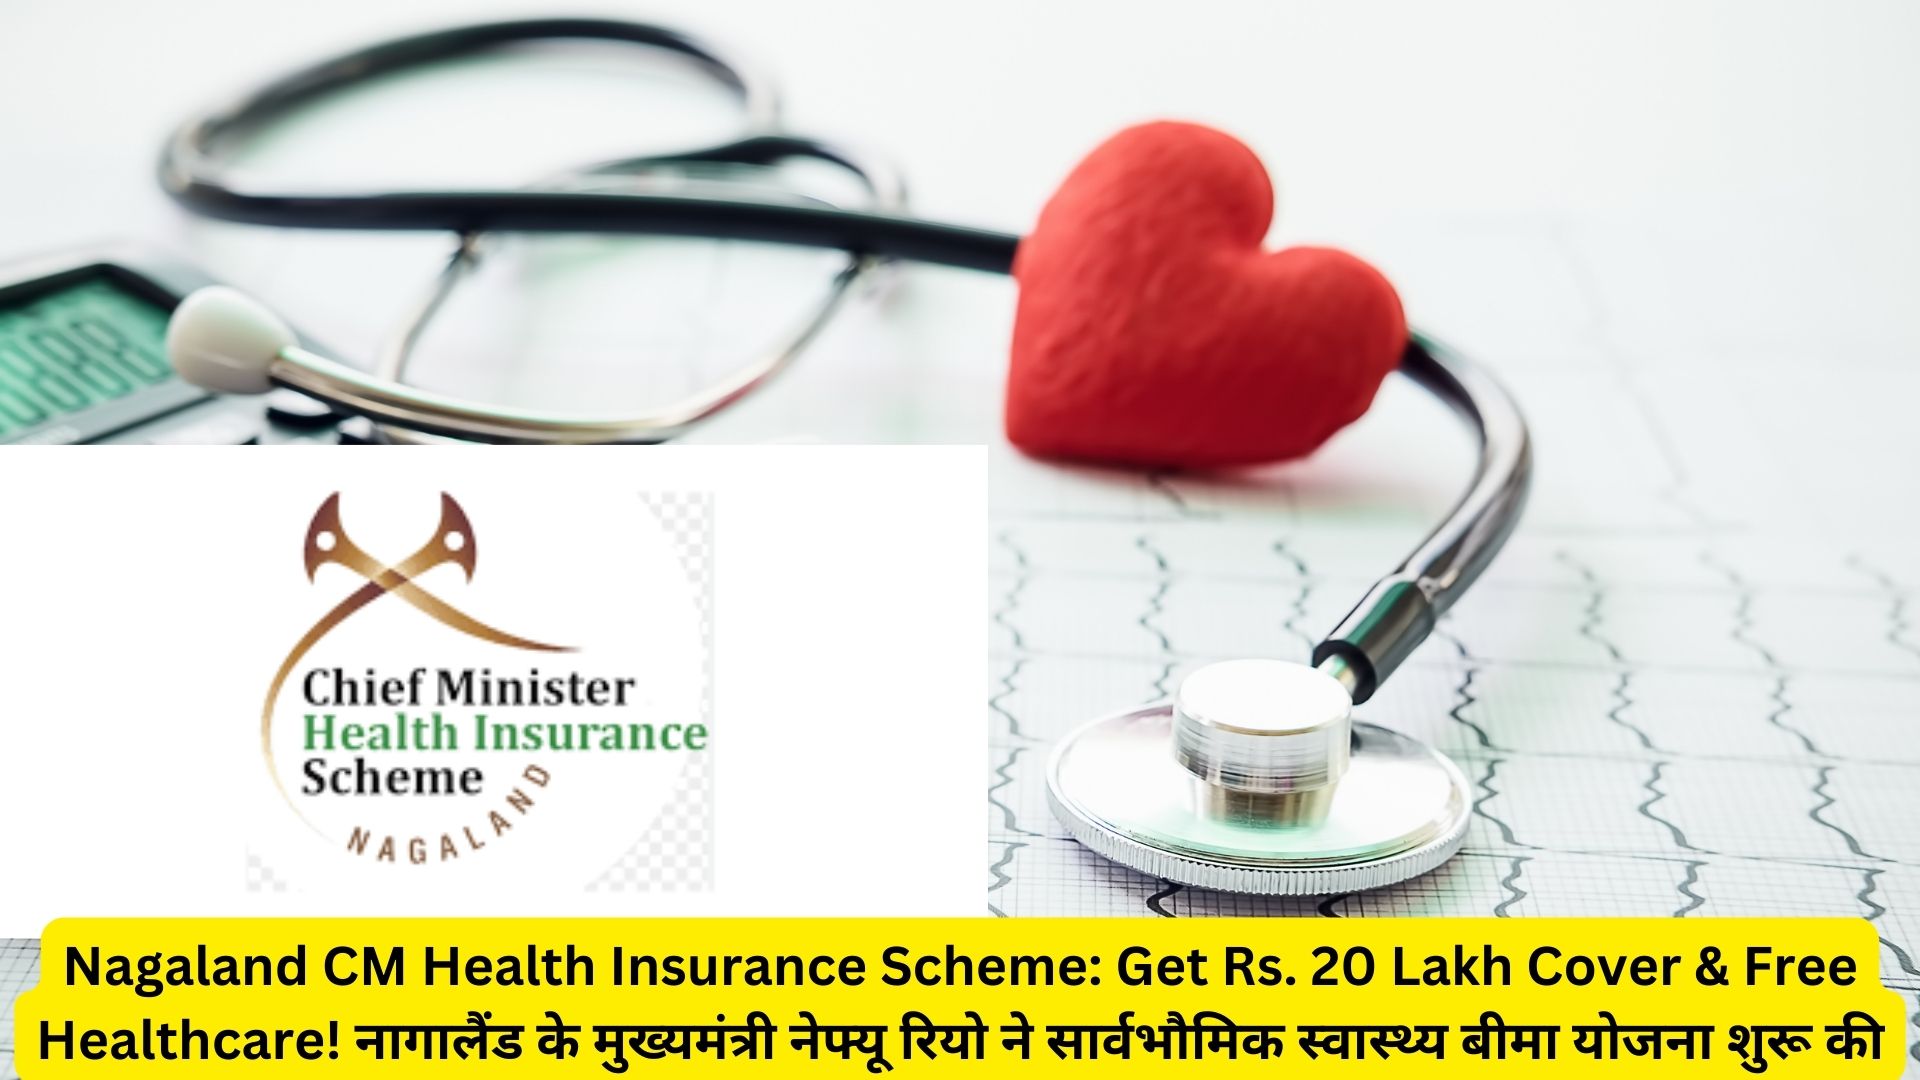 Nagaland CM Health Insurance Scheme: Get Rs. 20 Lakh Cover & Free Healthcare! नागालैंड के मुख्यमंत्री नेफ्यू रियो ने सार्वभौमिक स्वास्थ्य बीमा योजना शुरू की